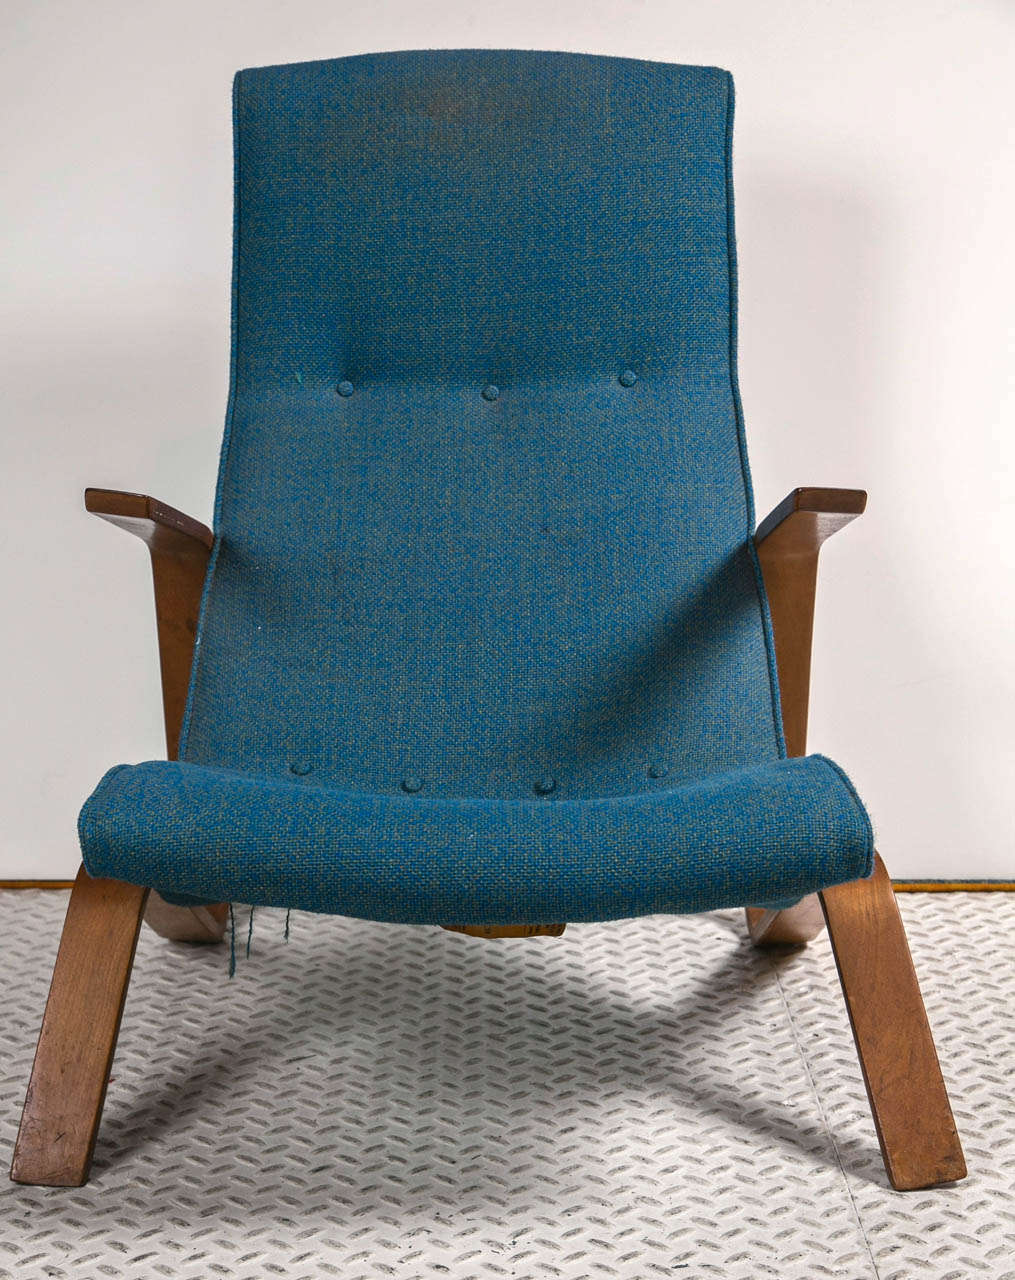 1940's Knoll Grasshopper Chair by Eero Saarinen with a birch bentwood frame